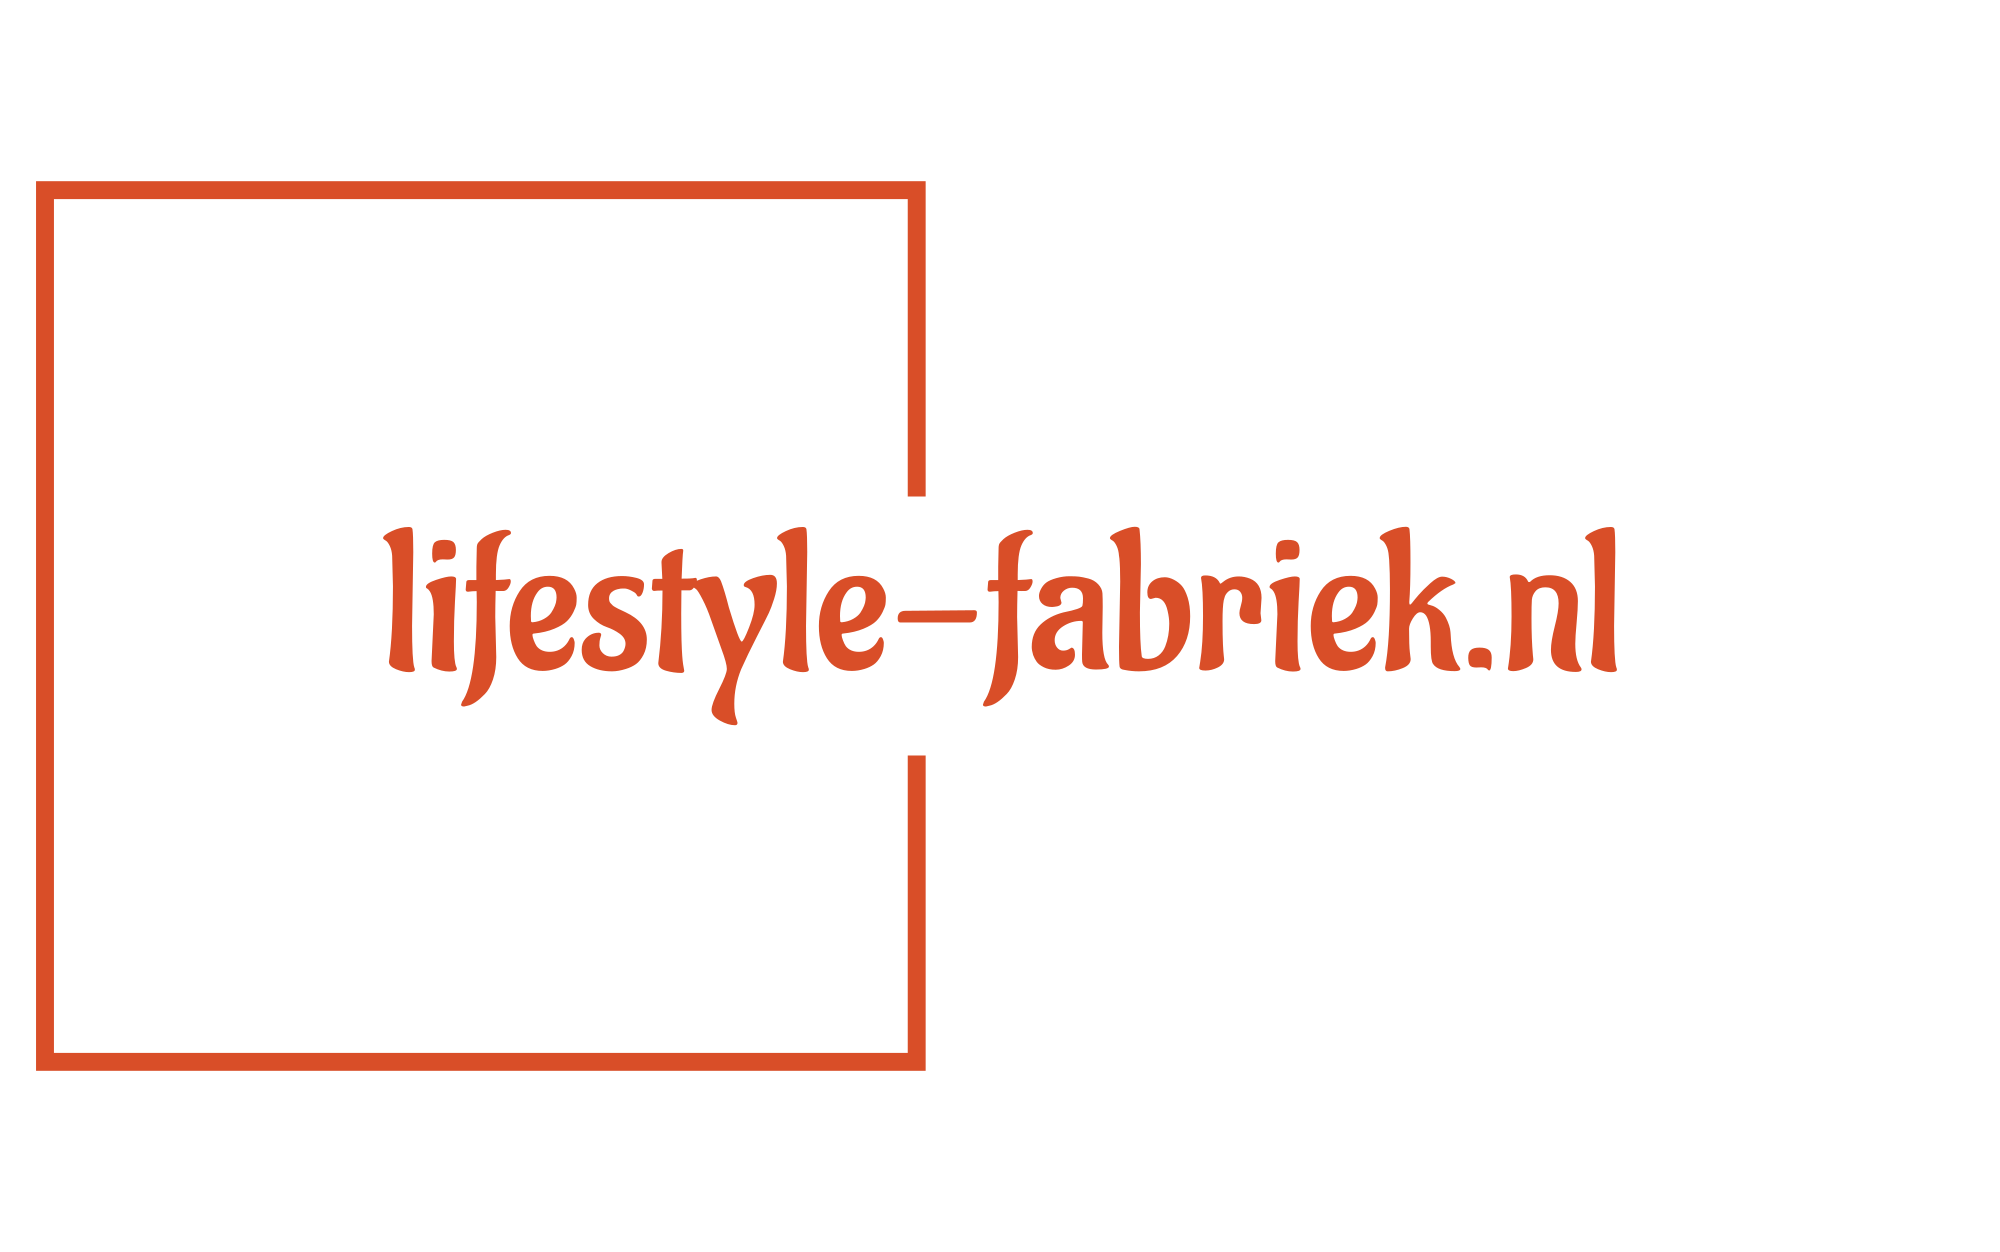 lifestyle-fabrieknl-high-resolution-logo-transparent